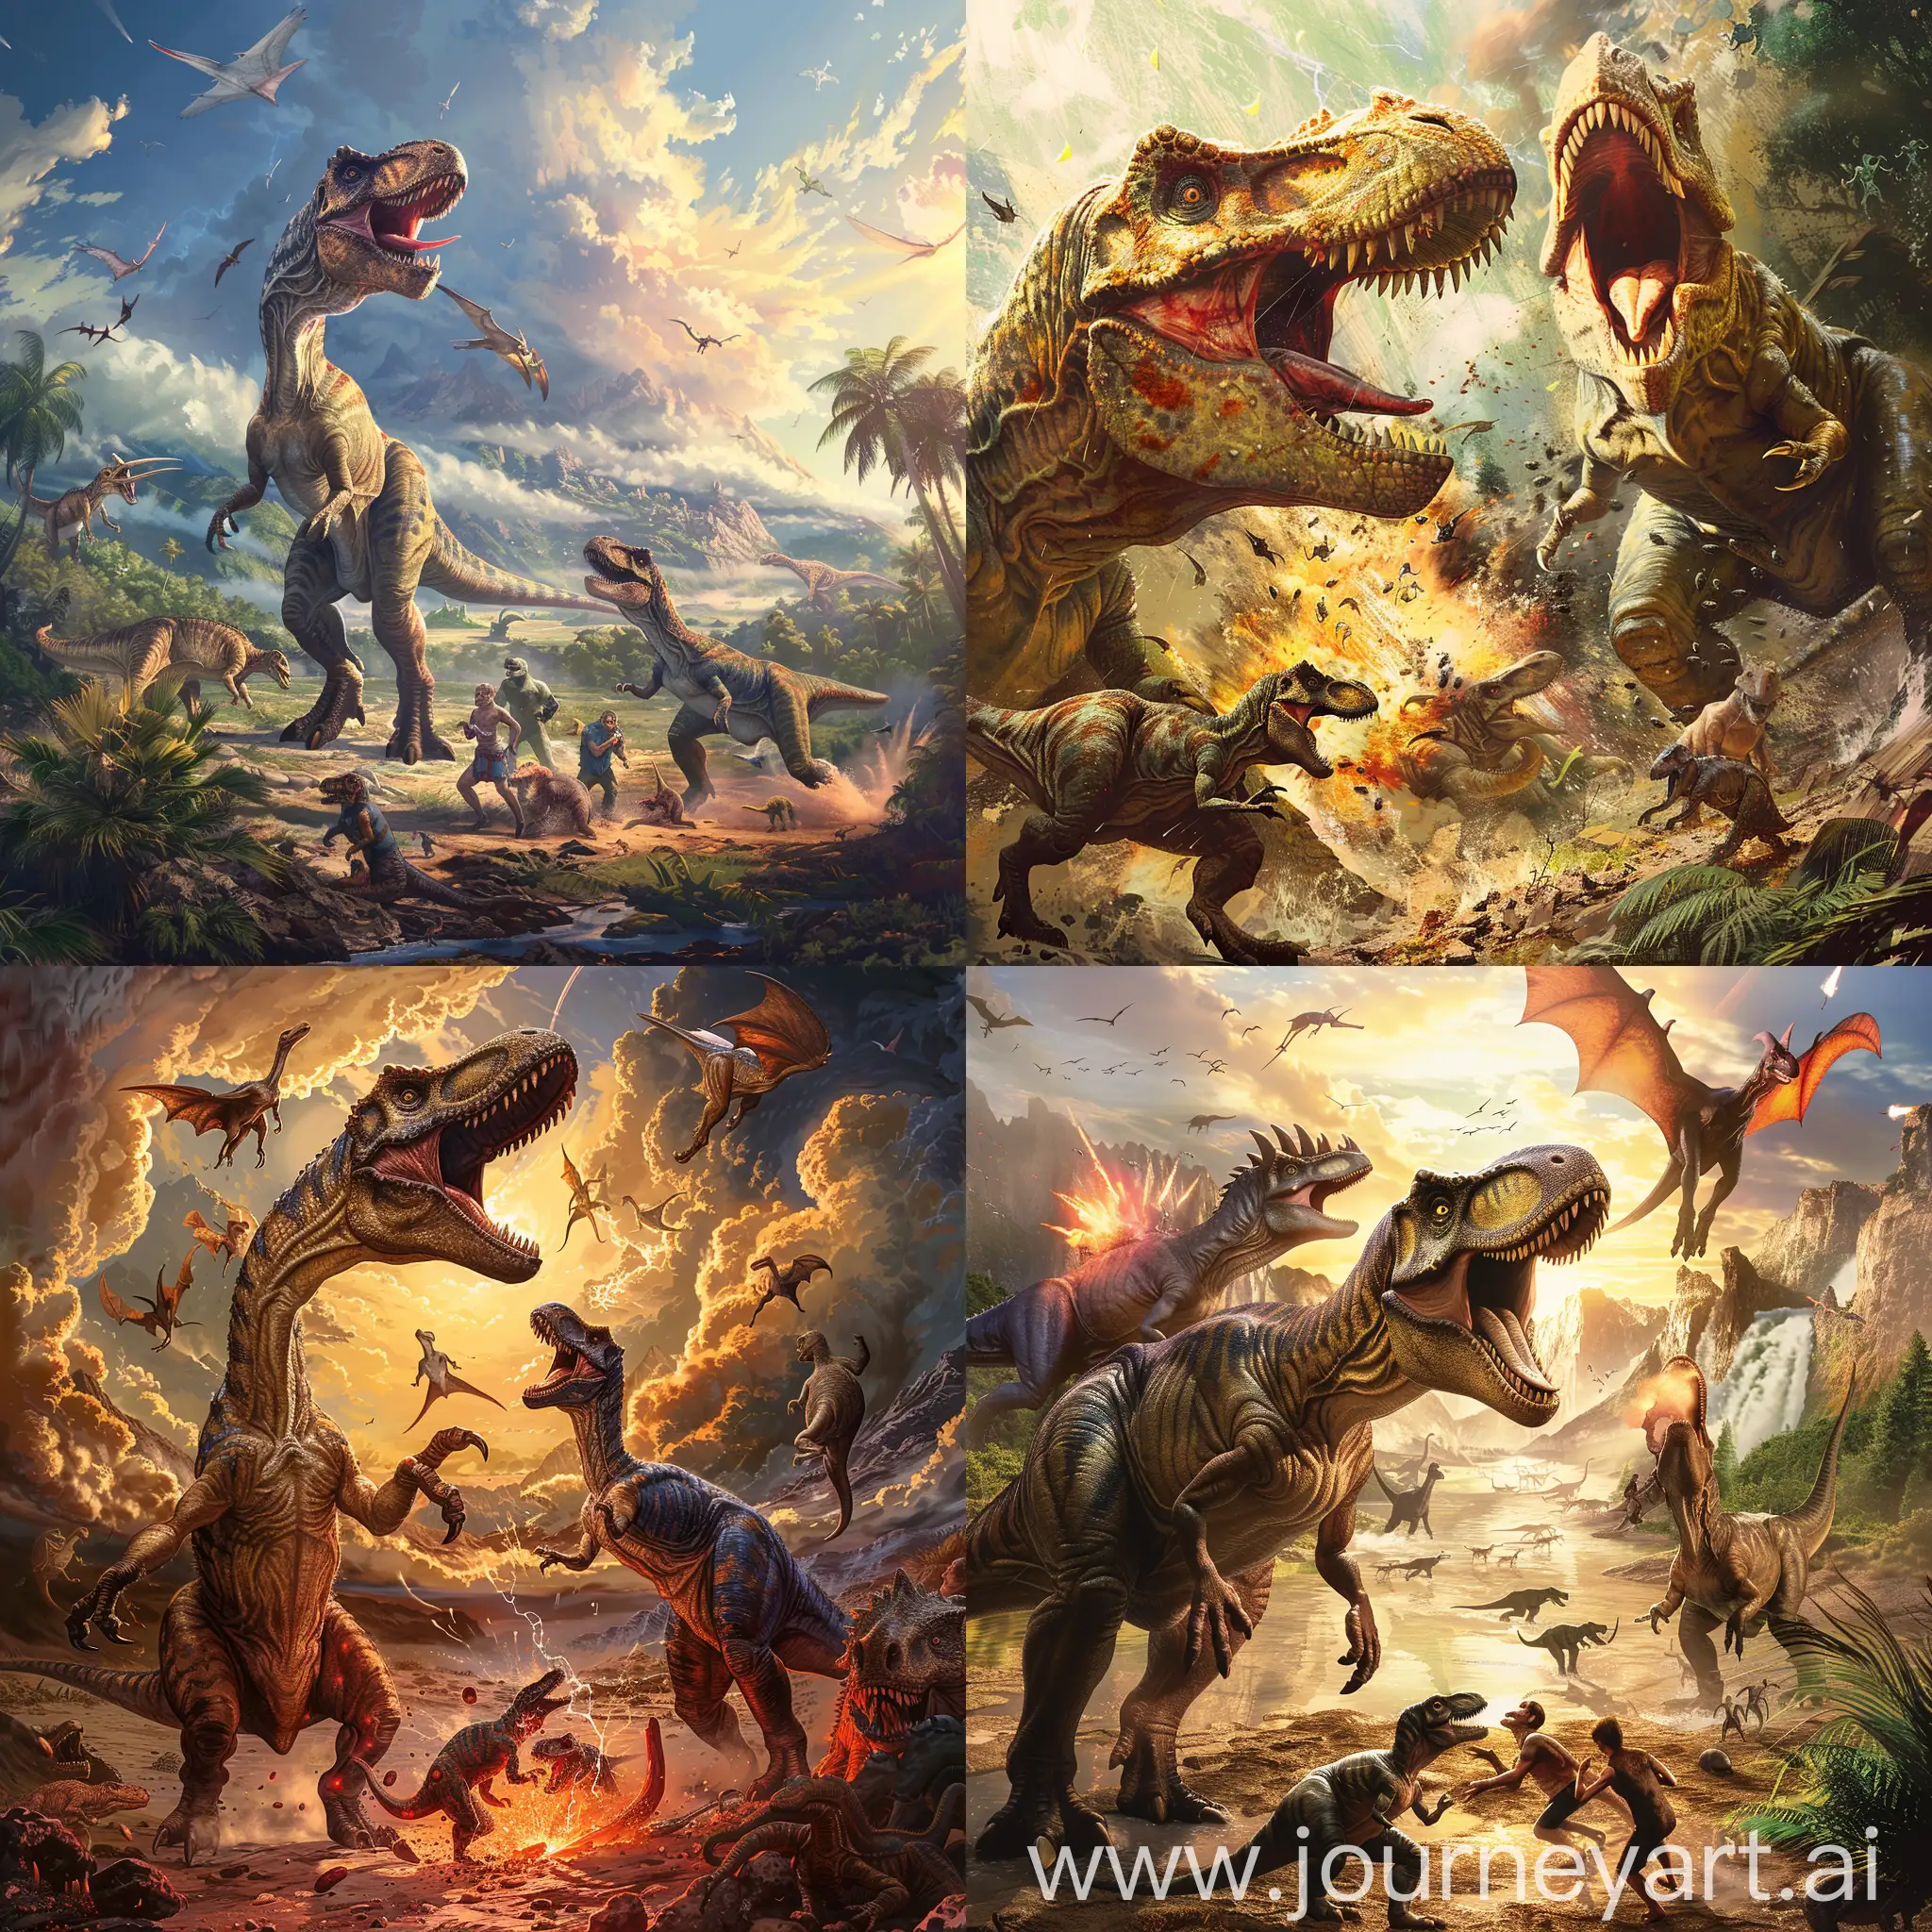 Survival-Amidst-Prehistoric-Predators-Humans-Evading-Dinosaurs